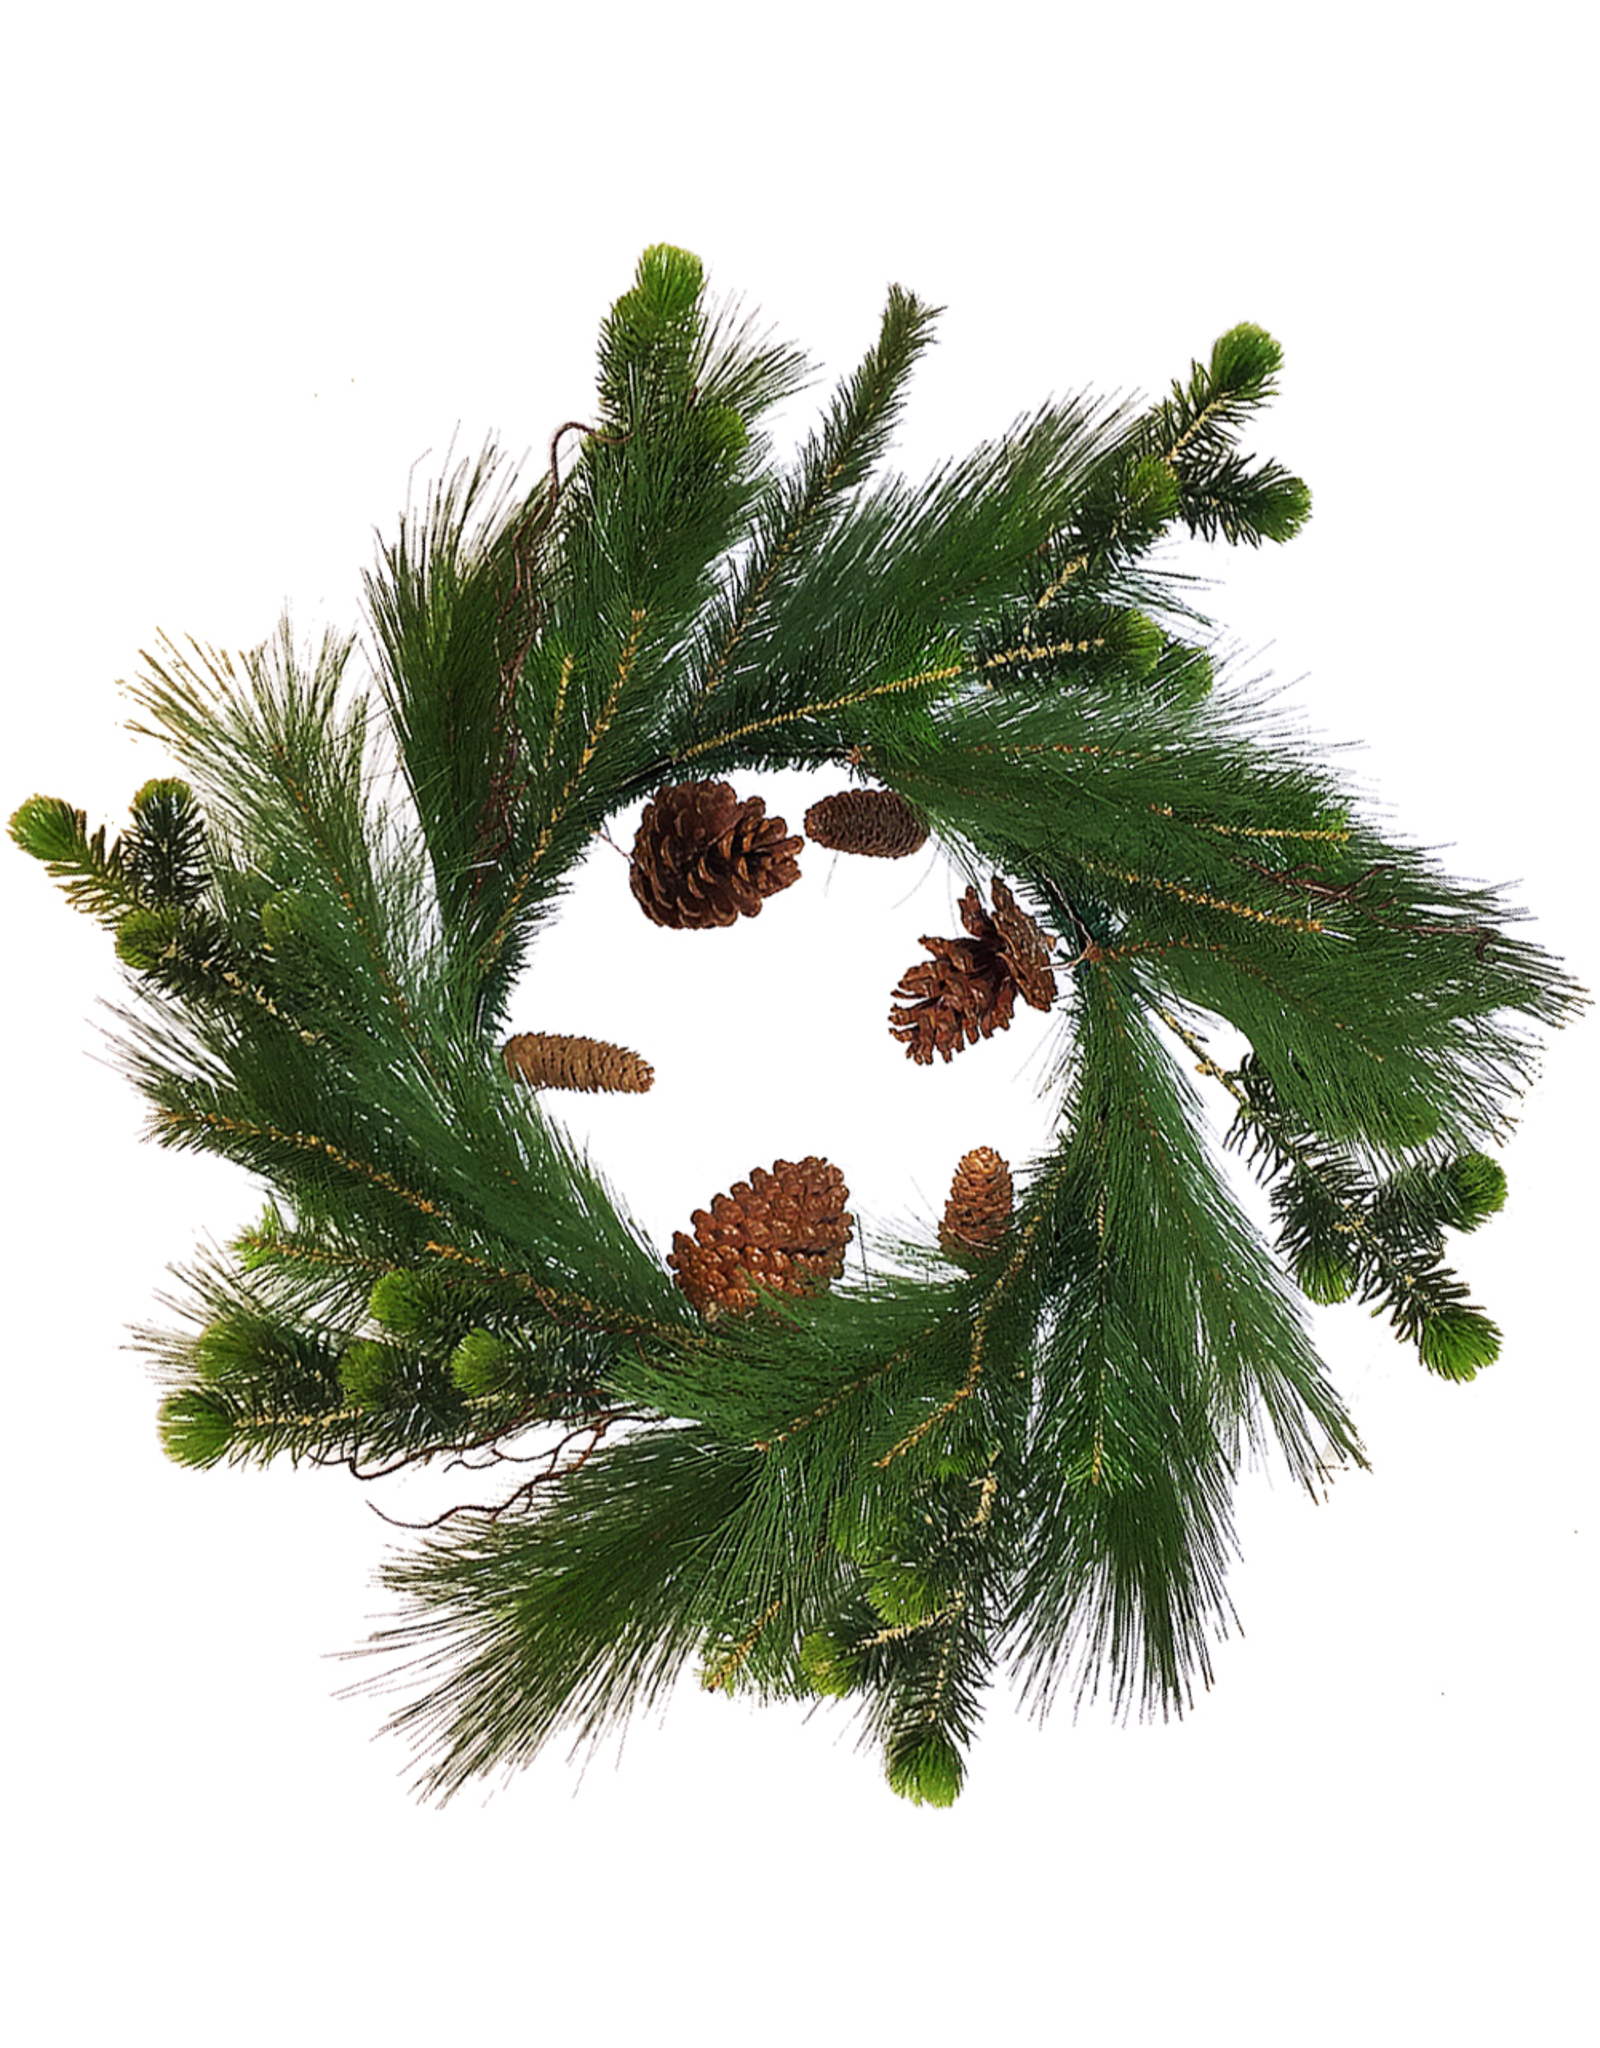 Darice Christmas Wreath 24 inch Mixed Greens Pine w Pine Cones